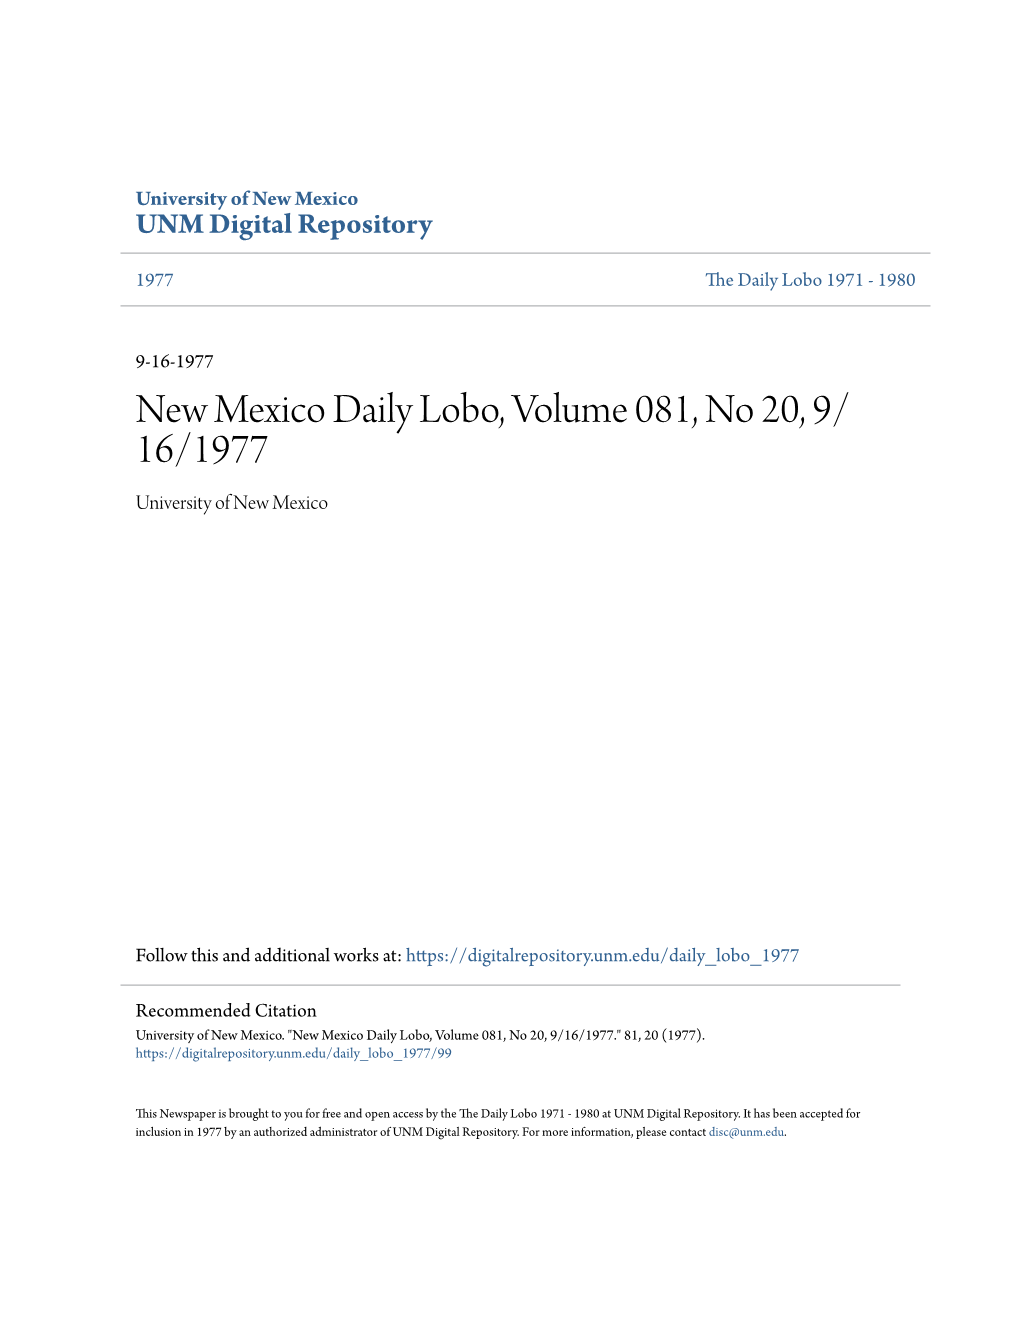 New Mexico Daily Lobo, Volume 081, No 20, 9/16/1977." 81, 20 (1977)